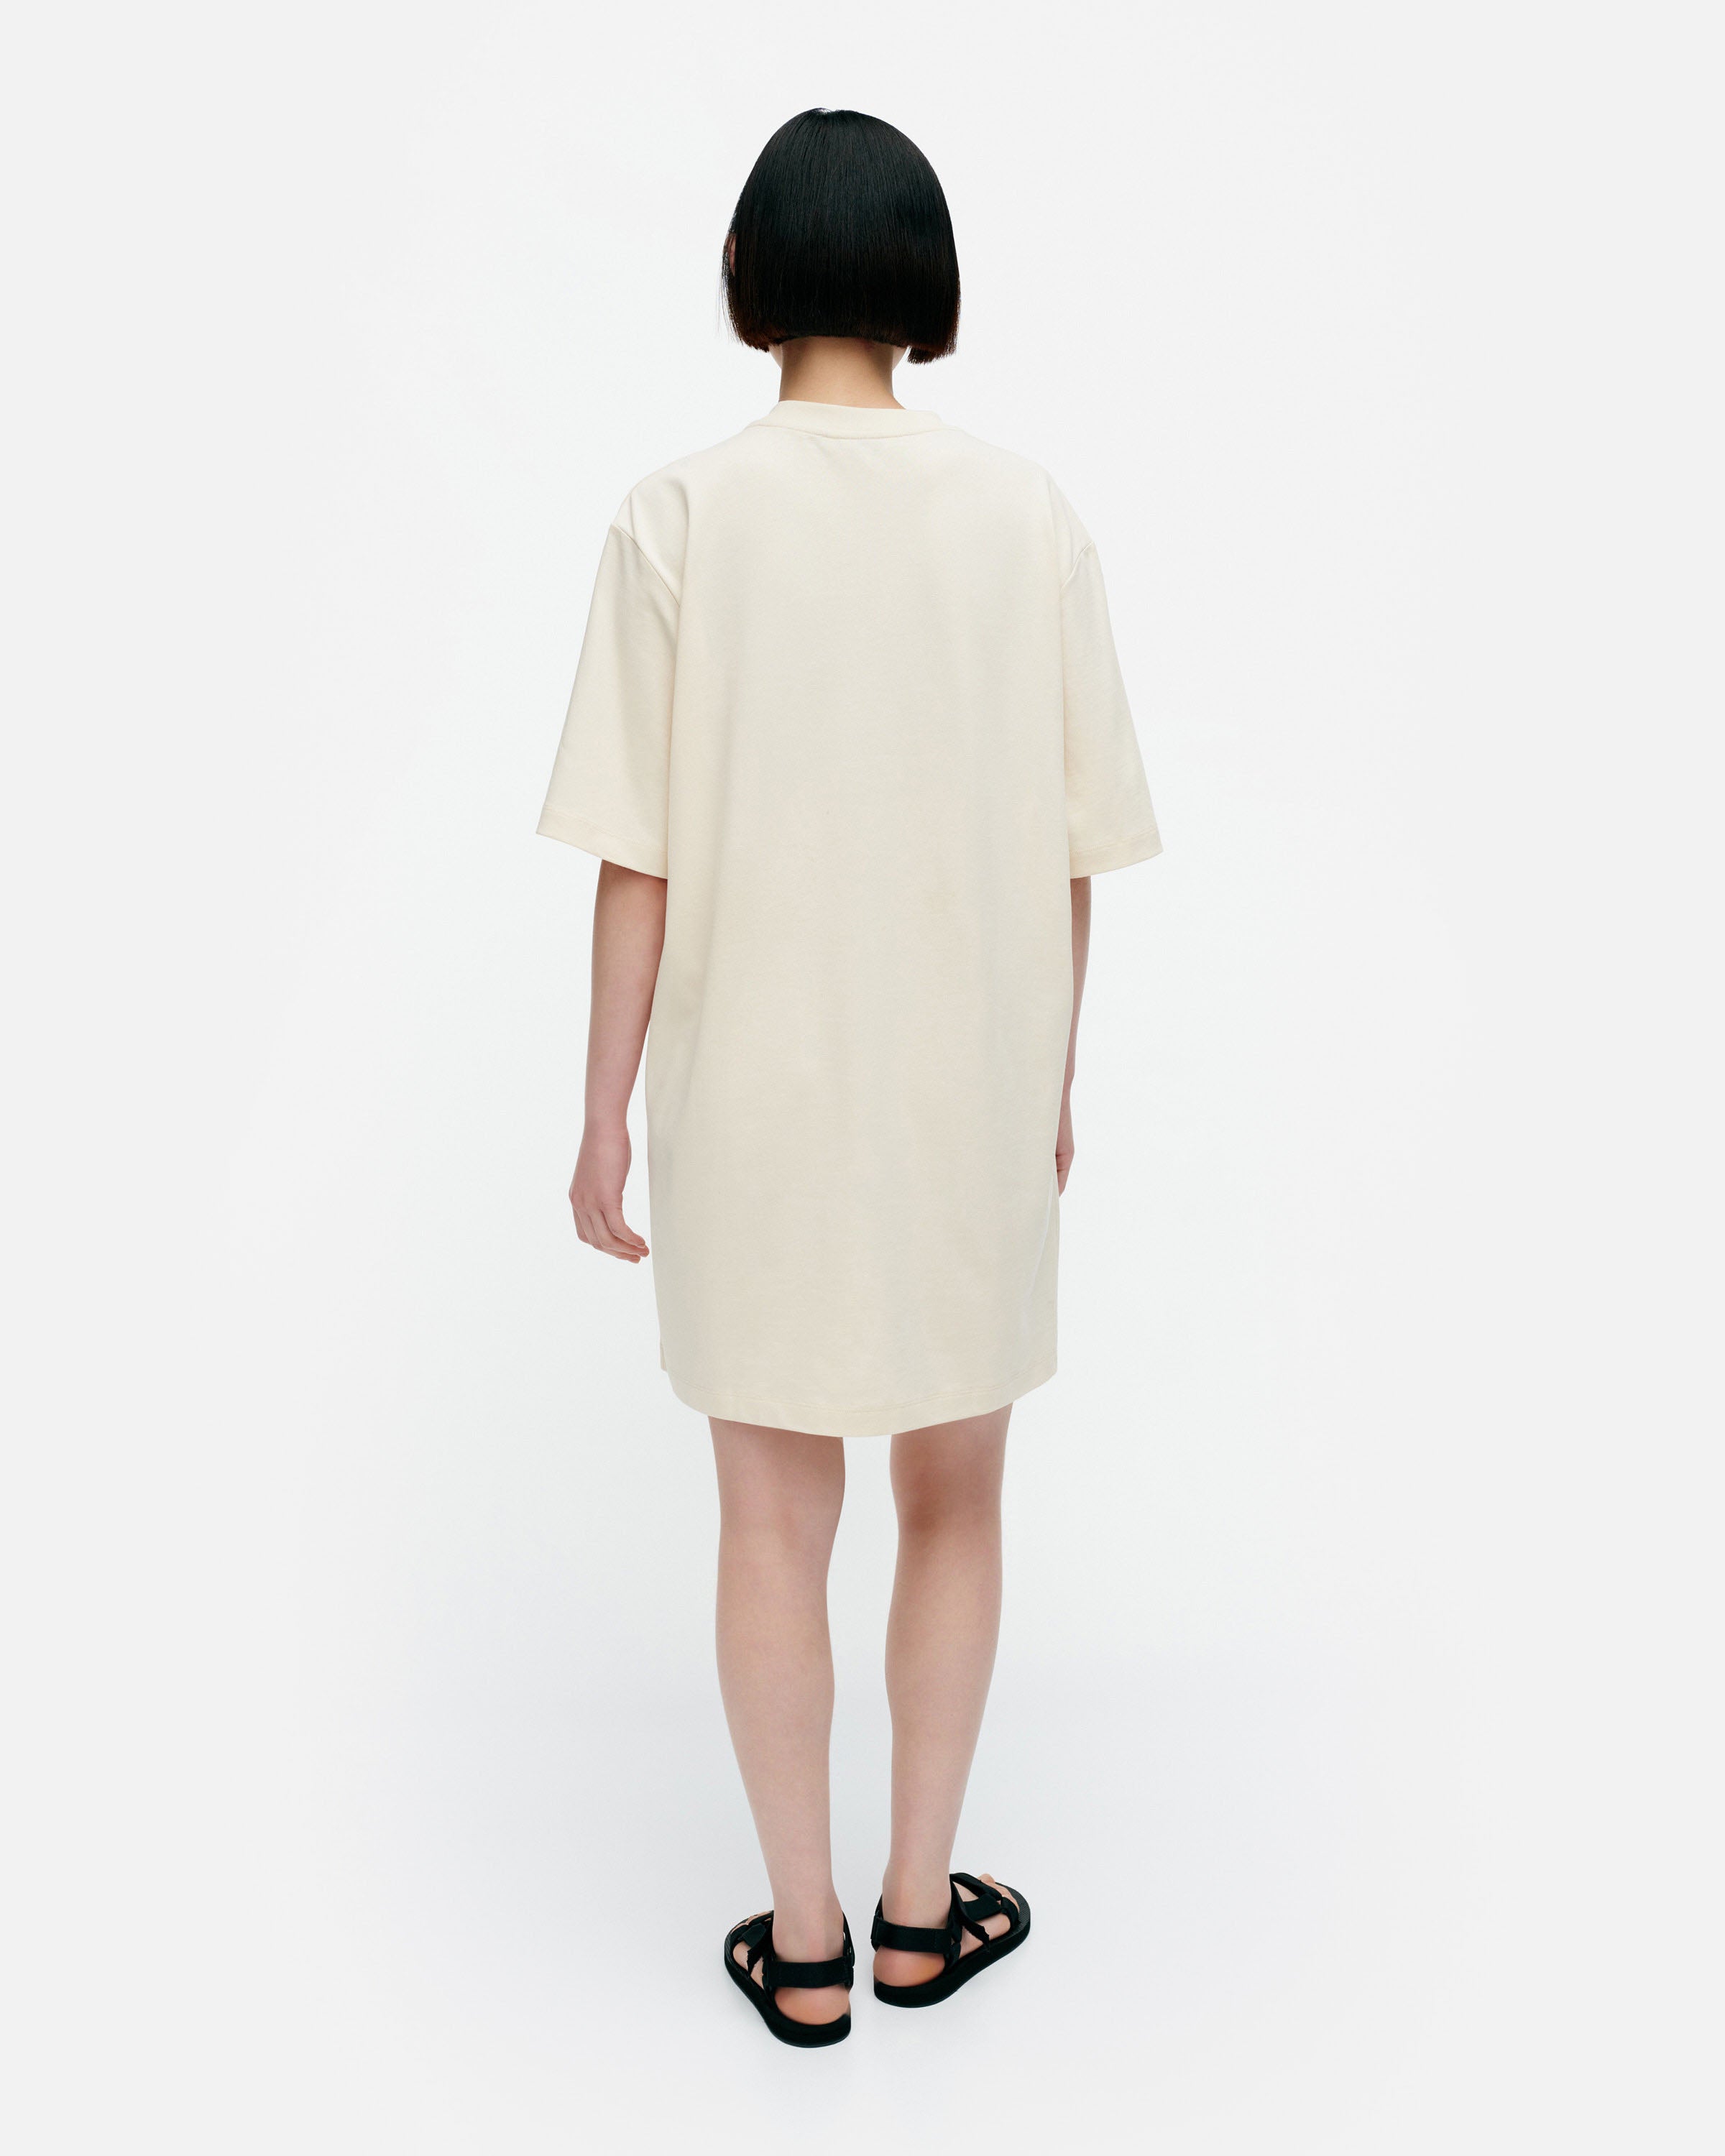 Sateet Unikko Oversized Jersey Dress 90cm